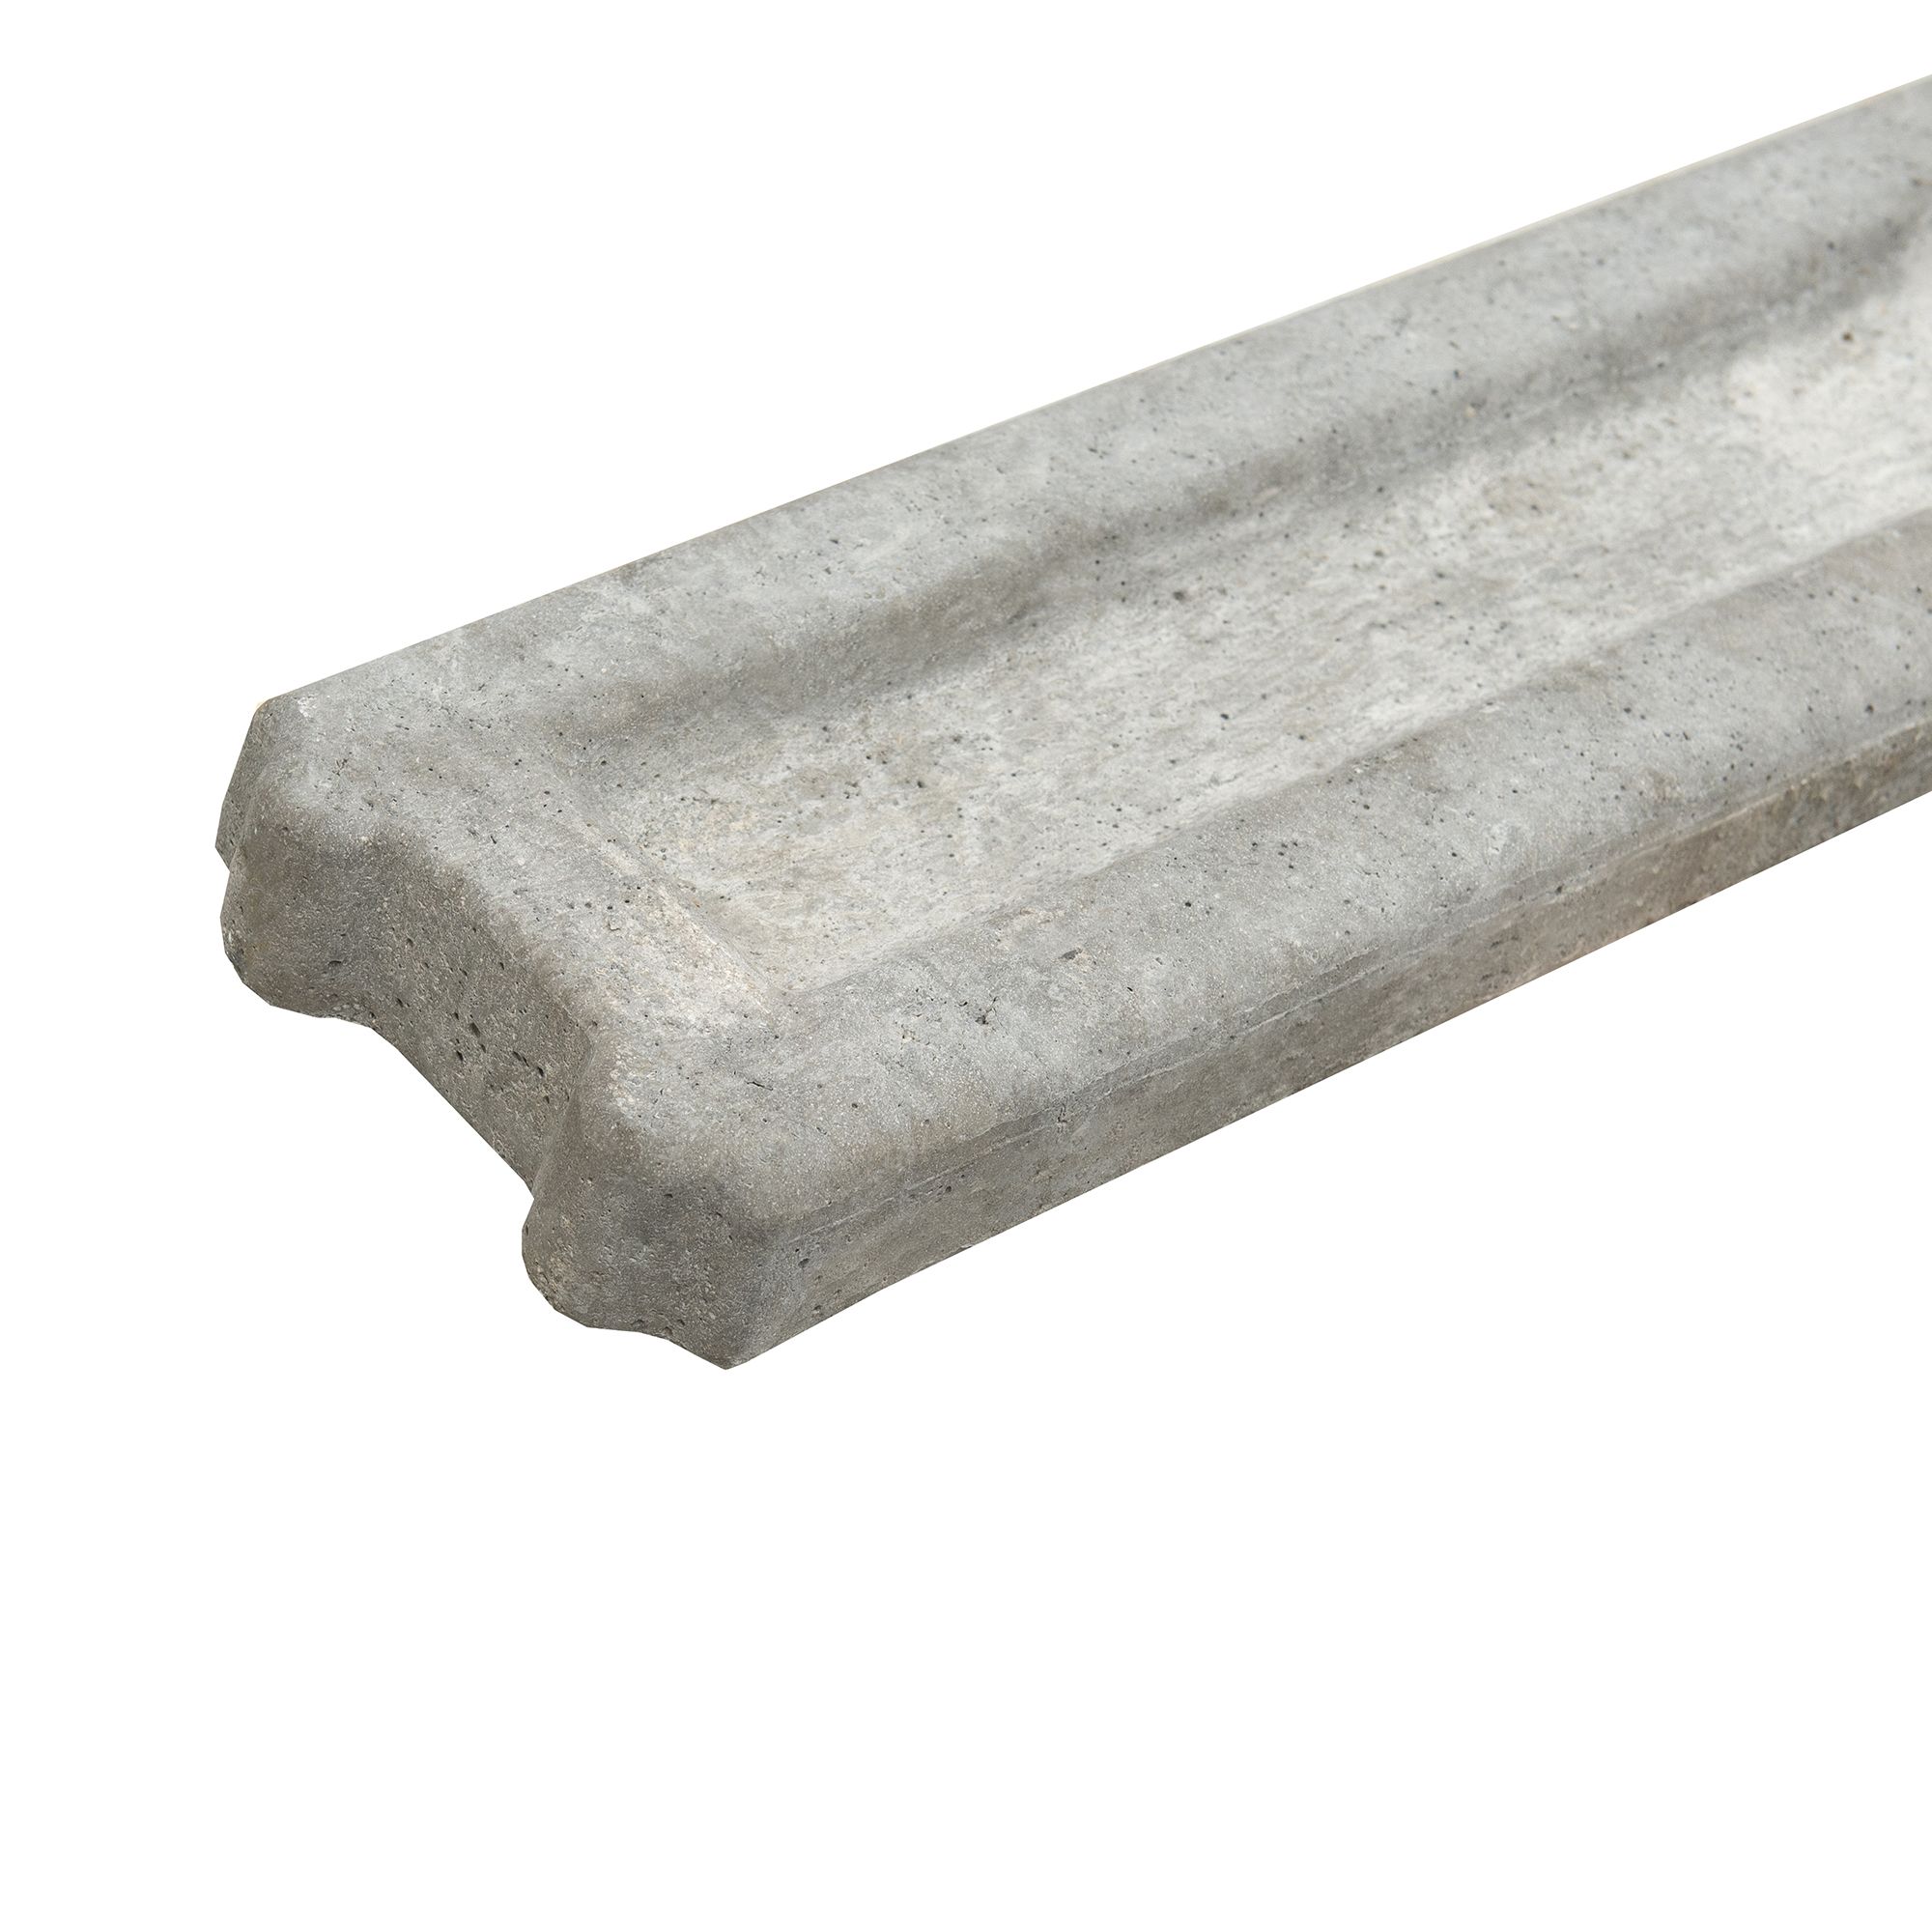 Forest Garden Concrete Cast Gravel board (L)1.83m (T)150mm, Pack of 10